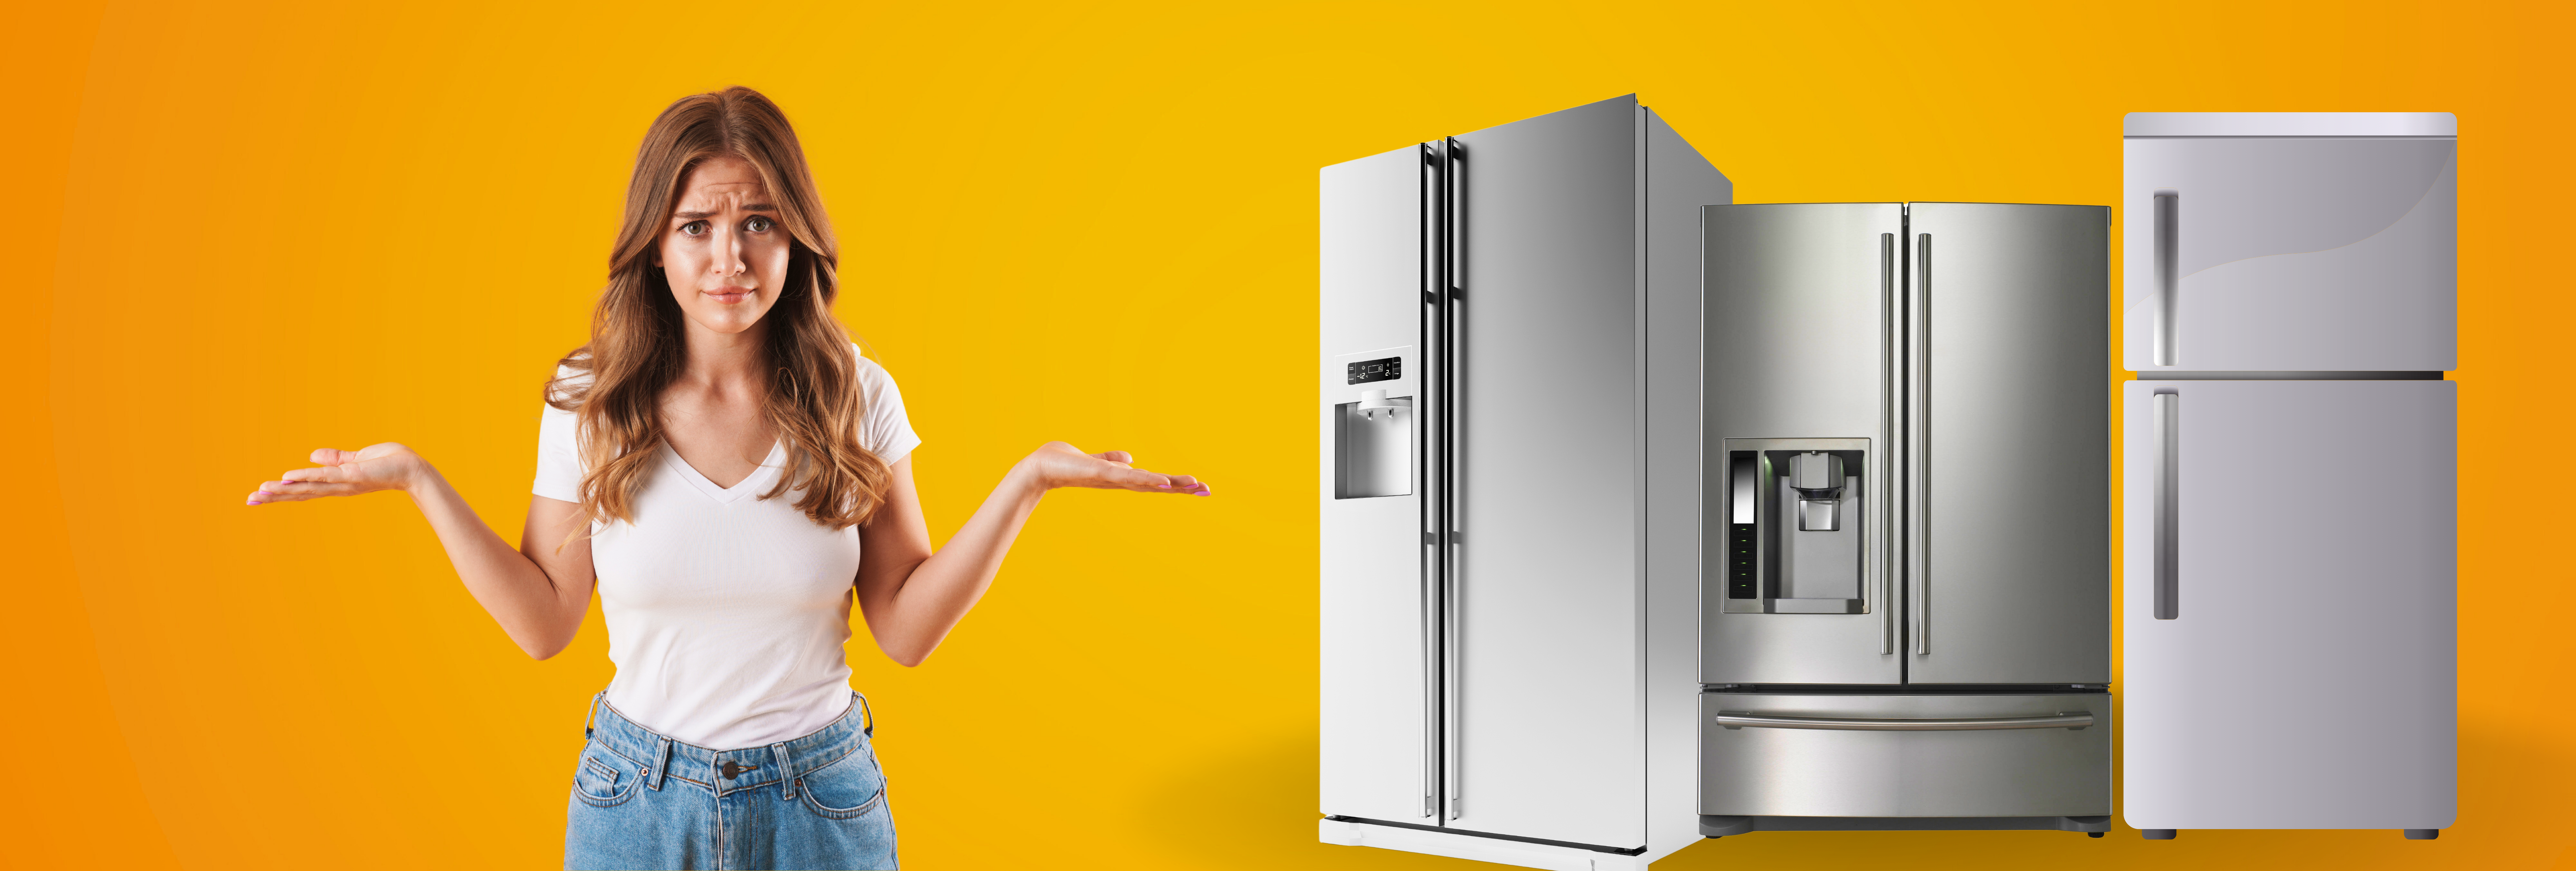 girl confuse to choosing refrigerator